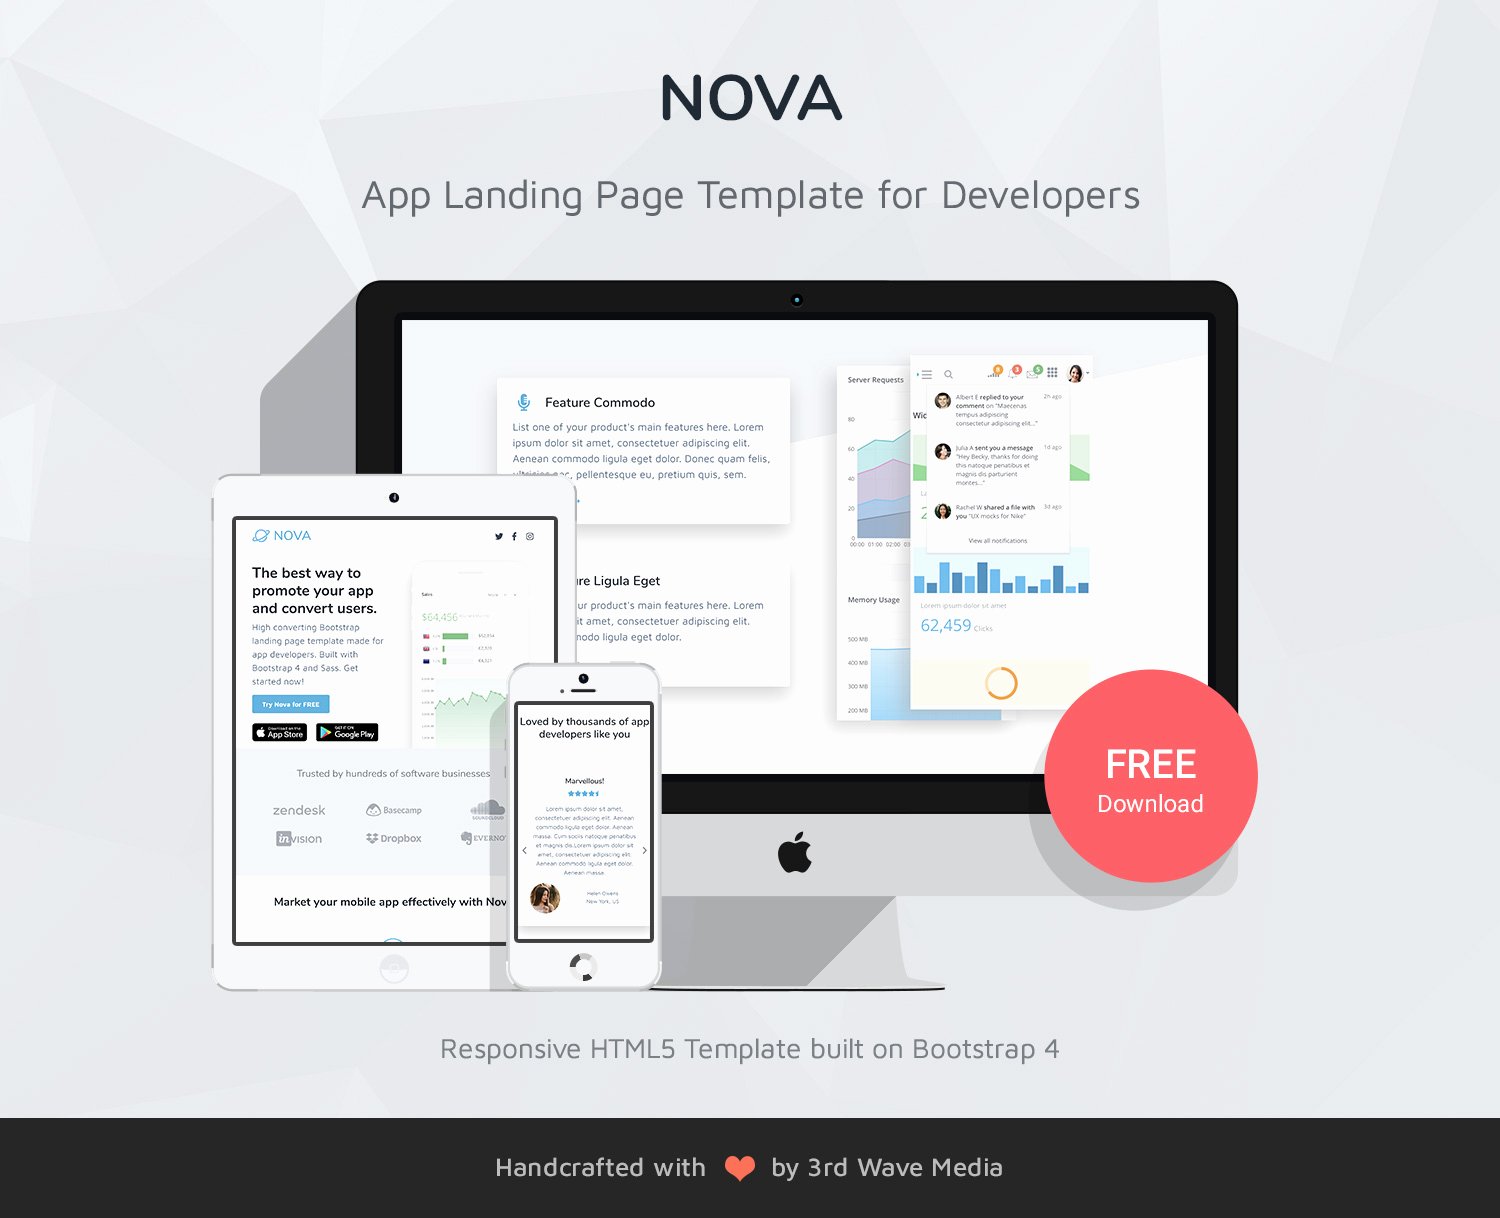 App Landing Page Template Inspirational Nova Free Bootstrap 4 App Landing Page Template for